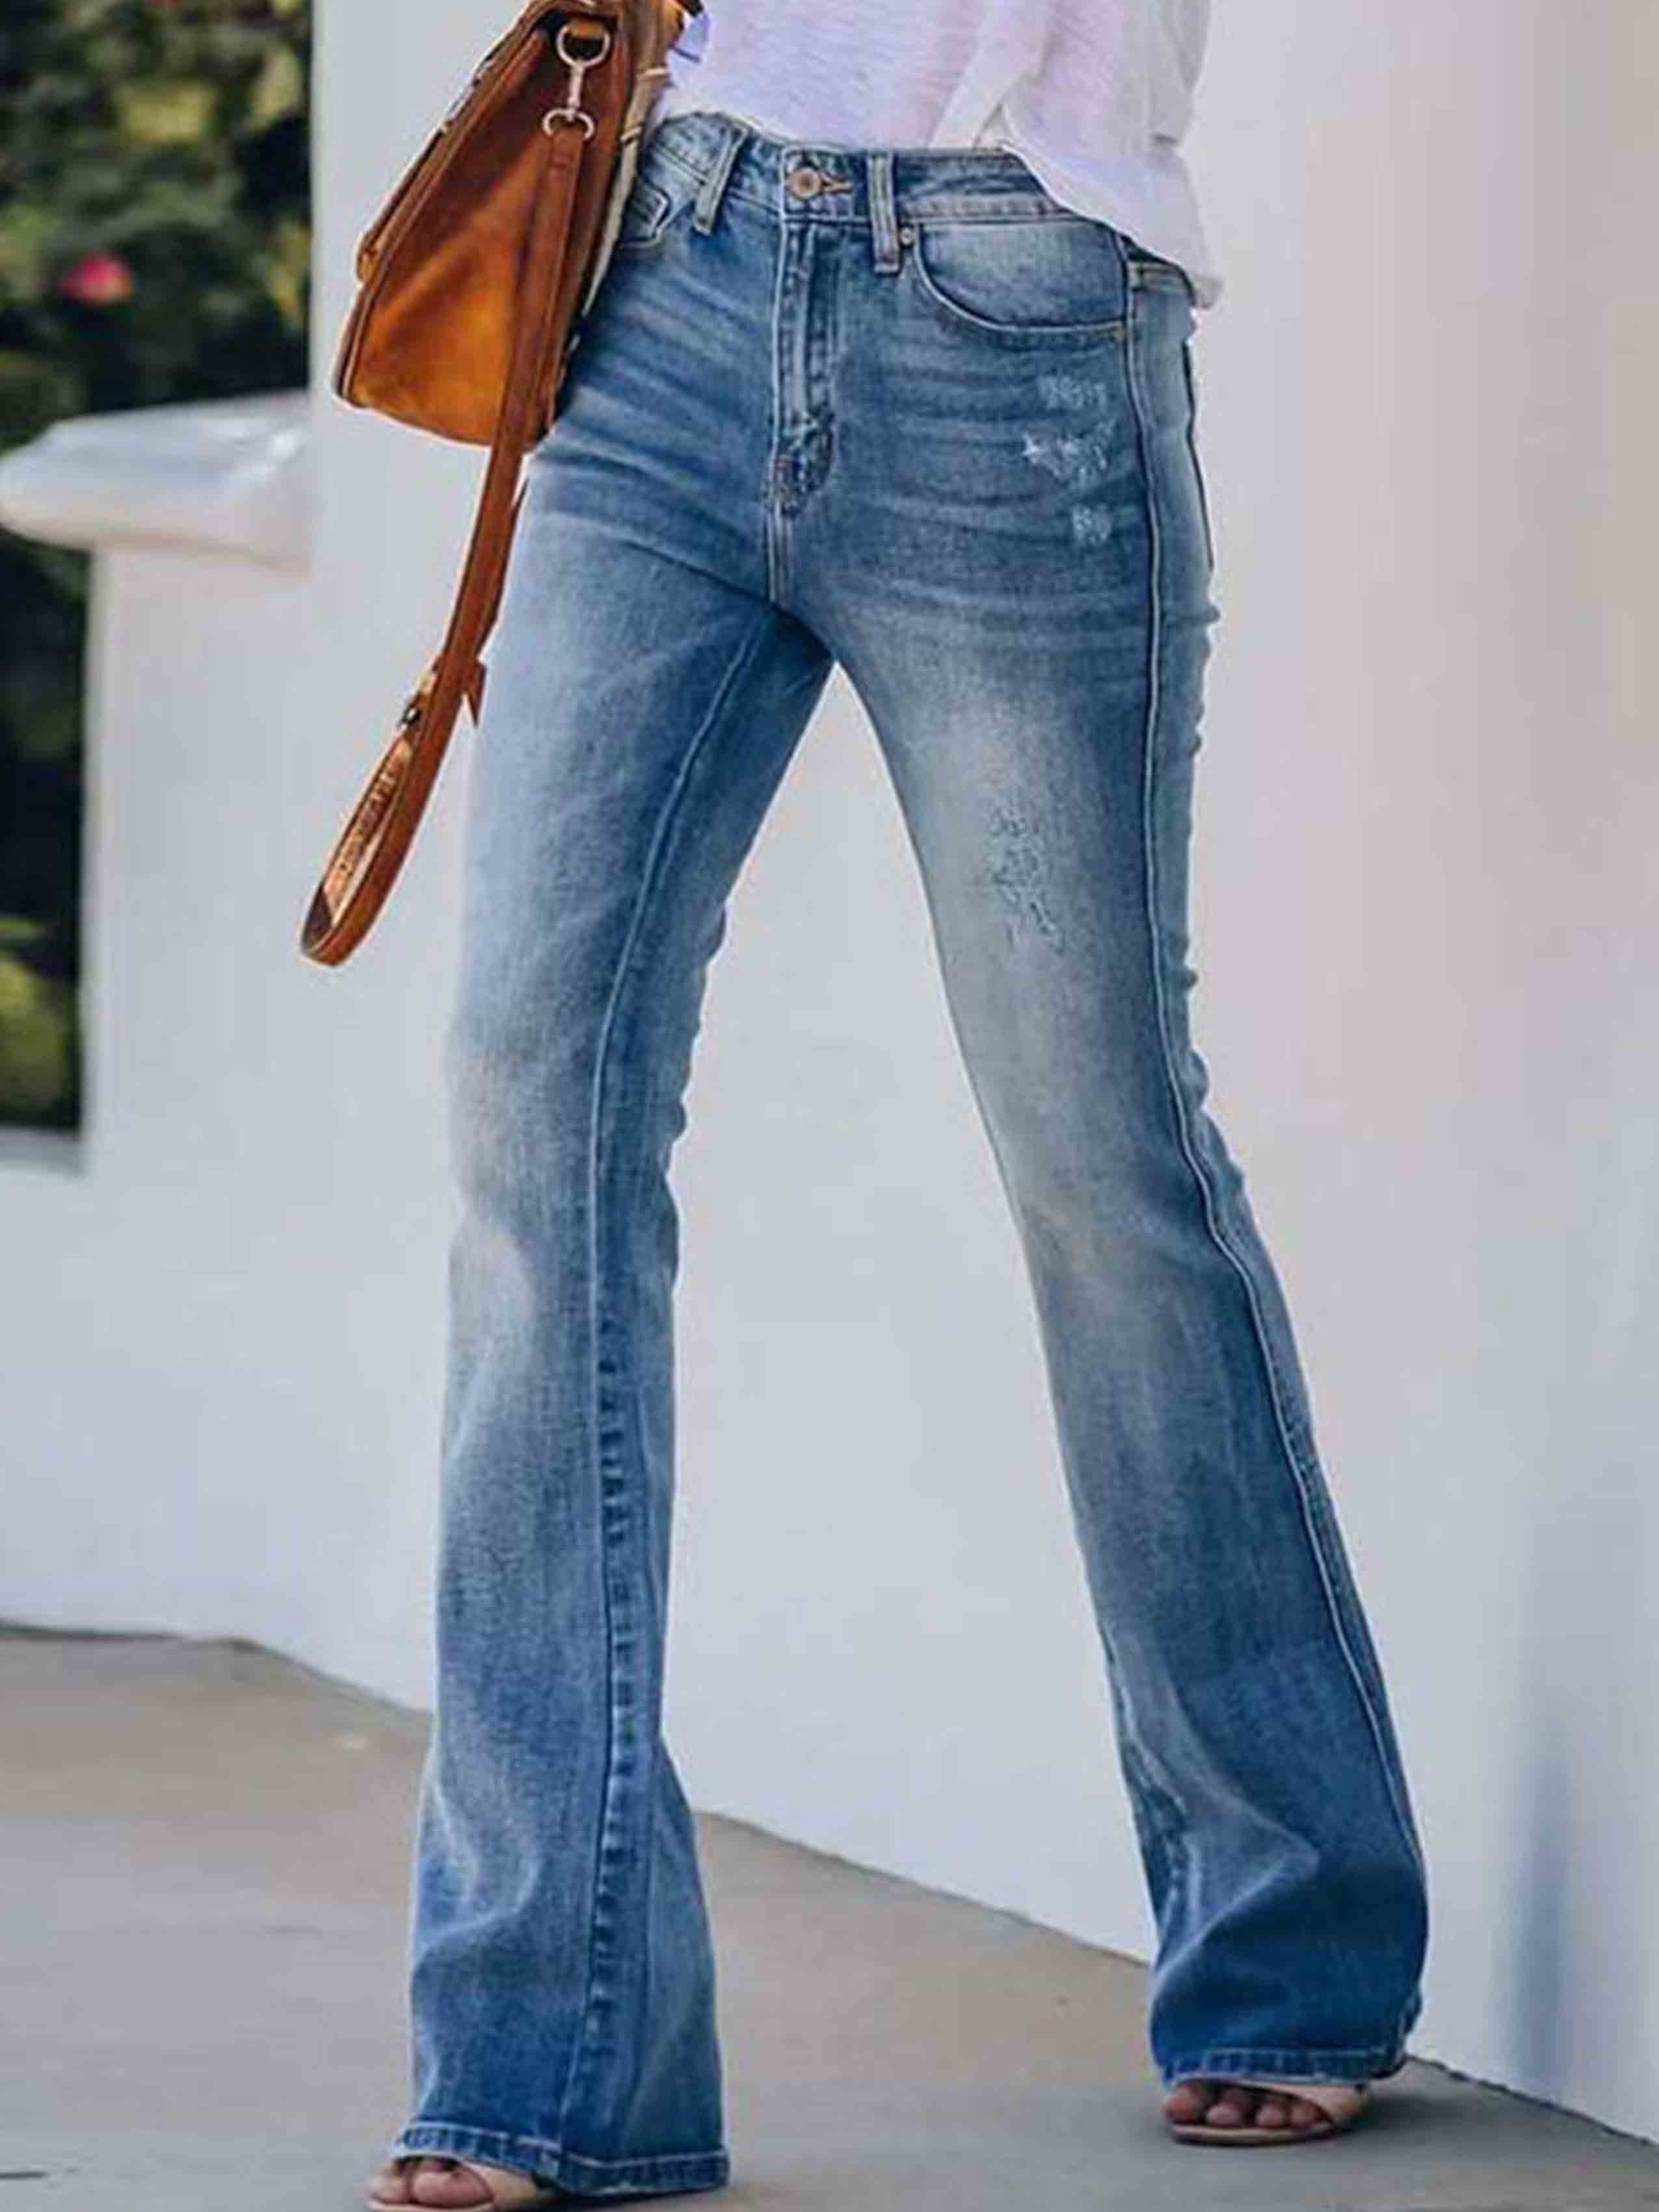 Vorioal High-Rise Stretch Jeans